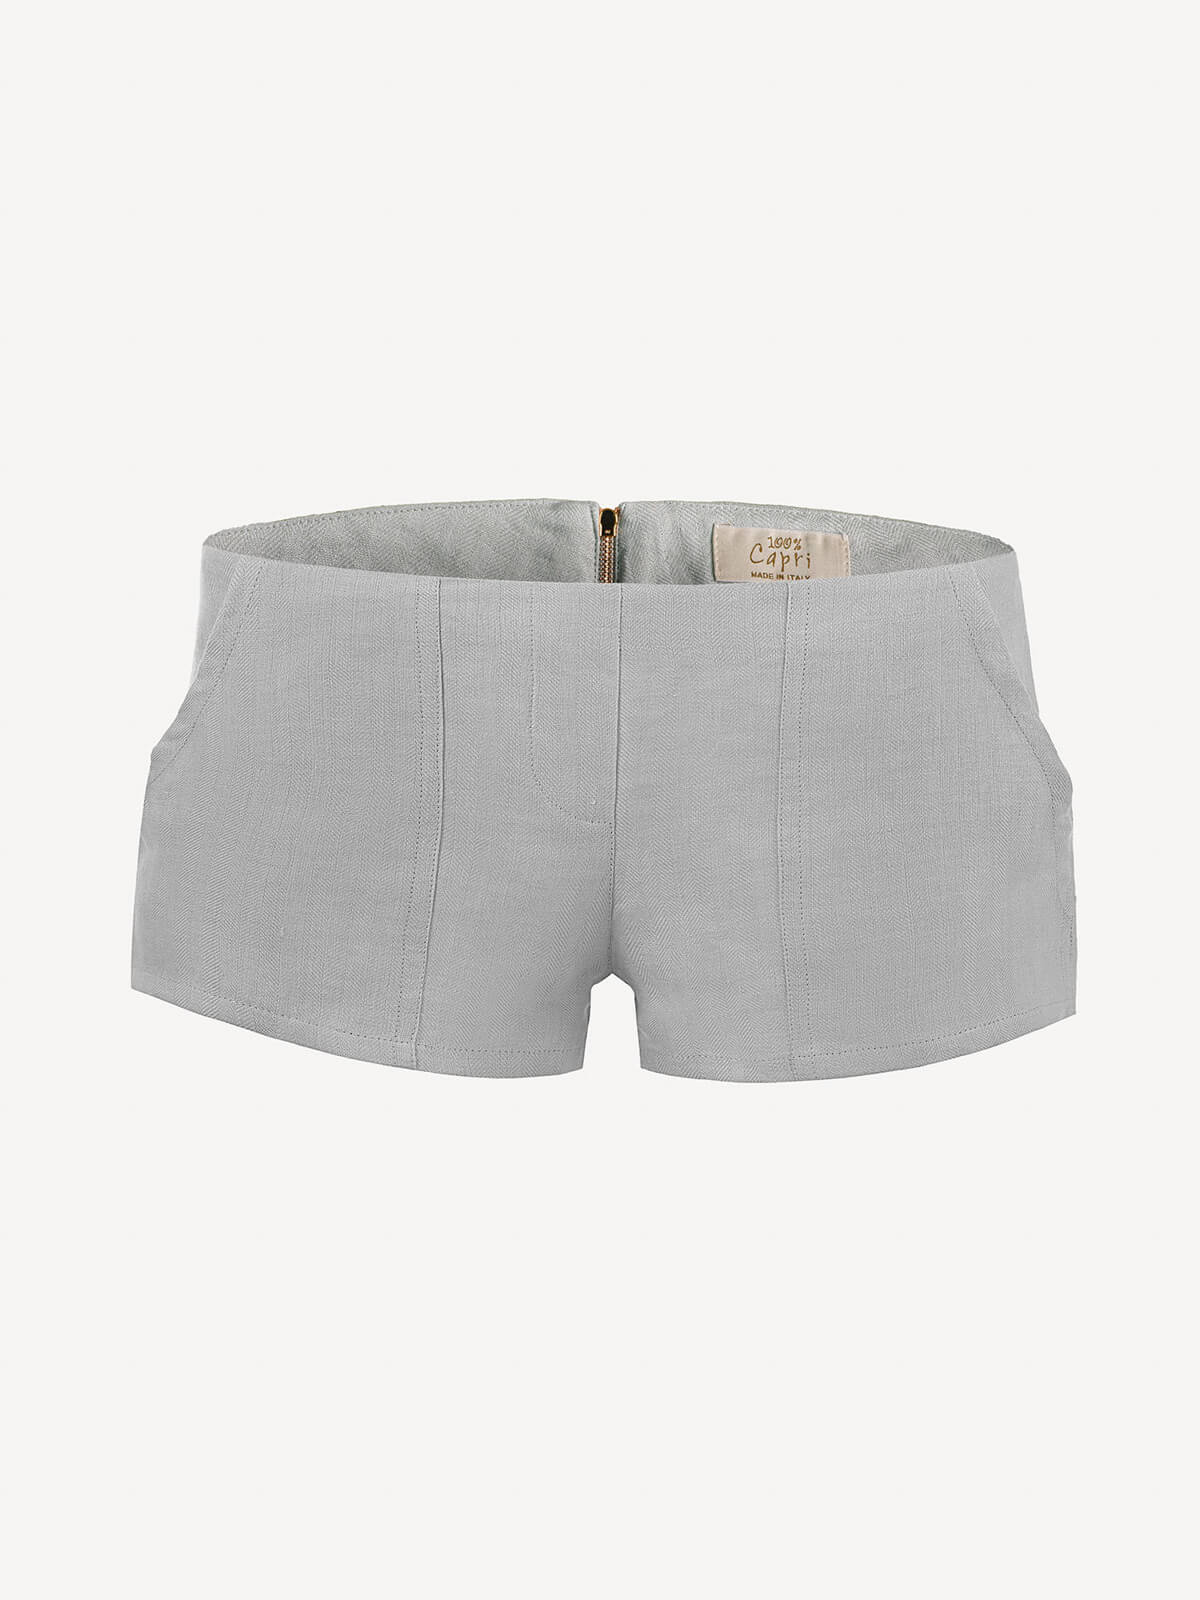 Short linen pants with zip for Woman grey color front 100% Capri